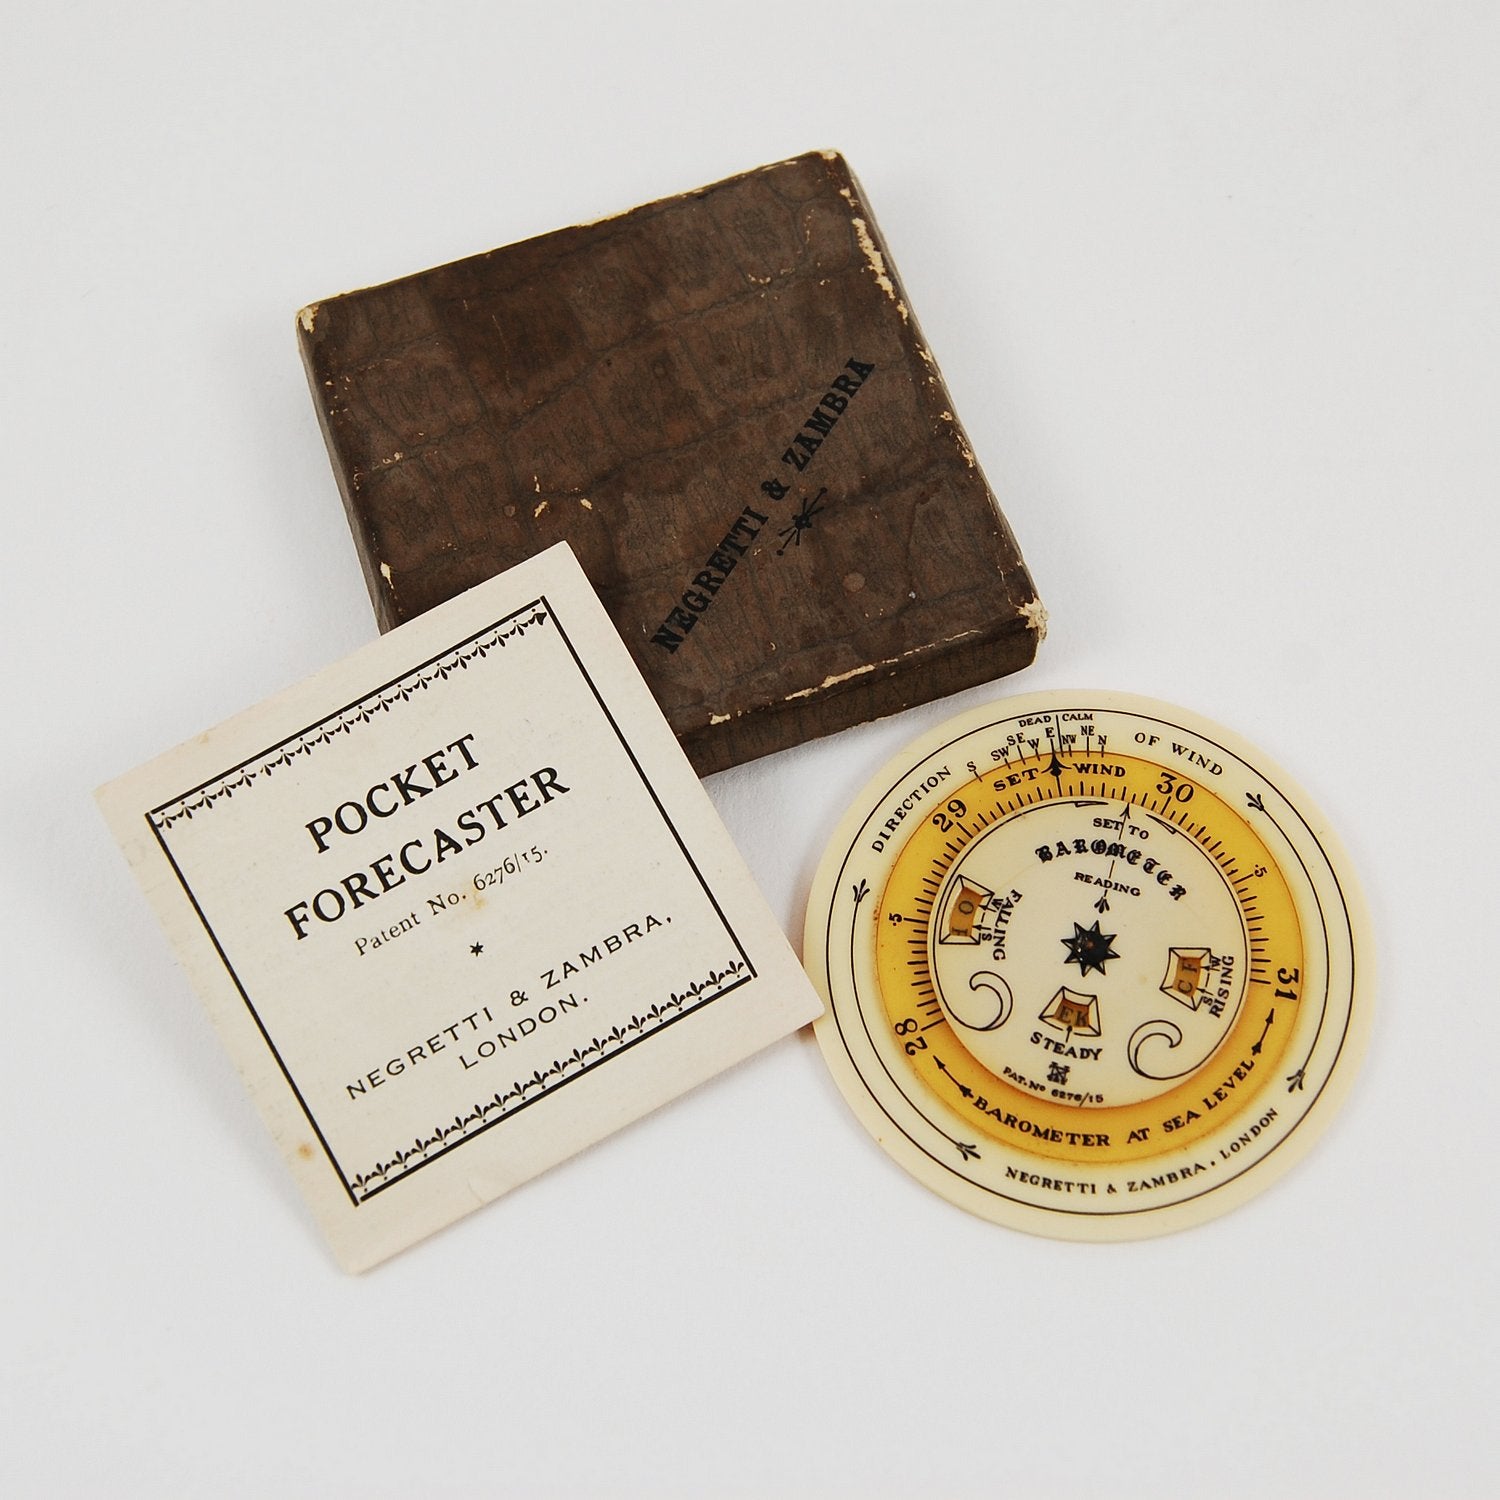 The Original Weather App: A 1915 Pocket Forecaster by Negretti & Zambra